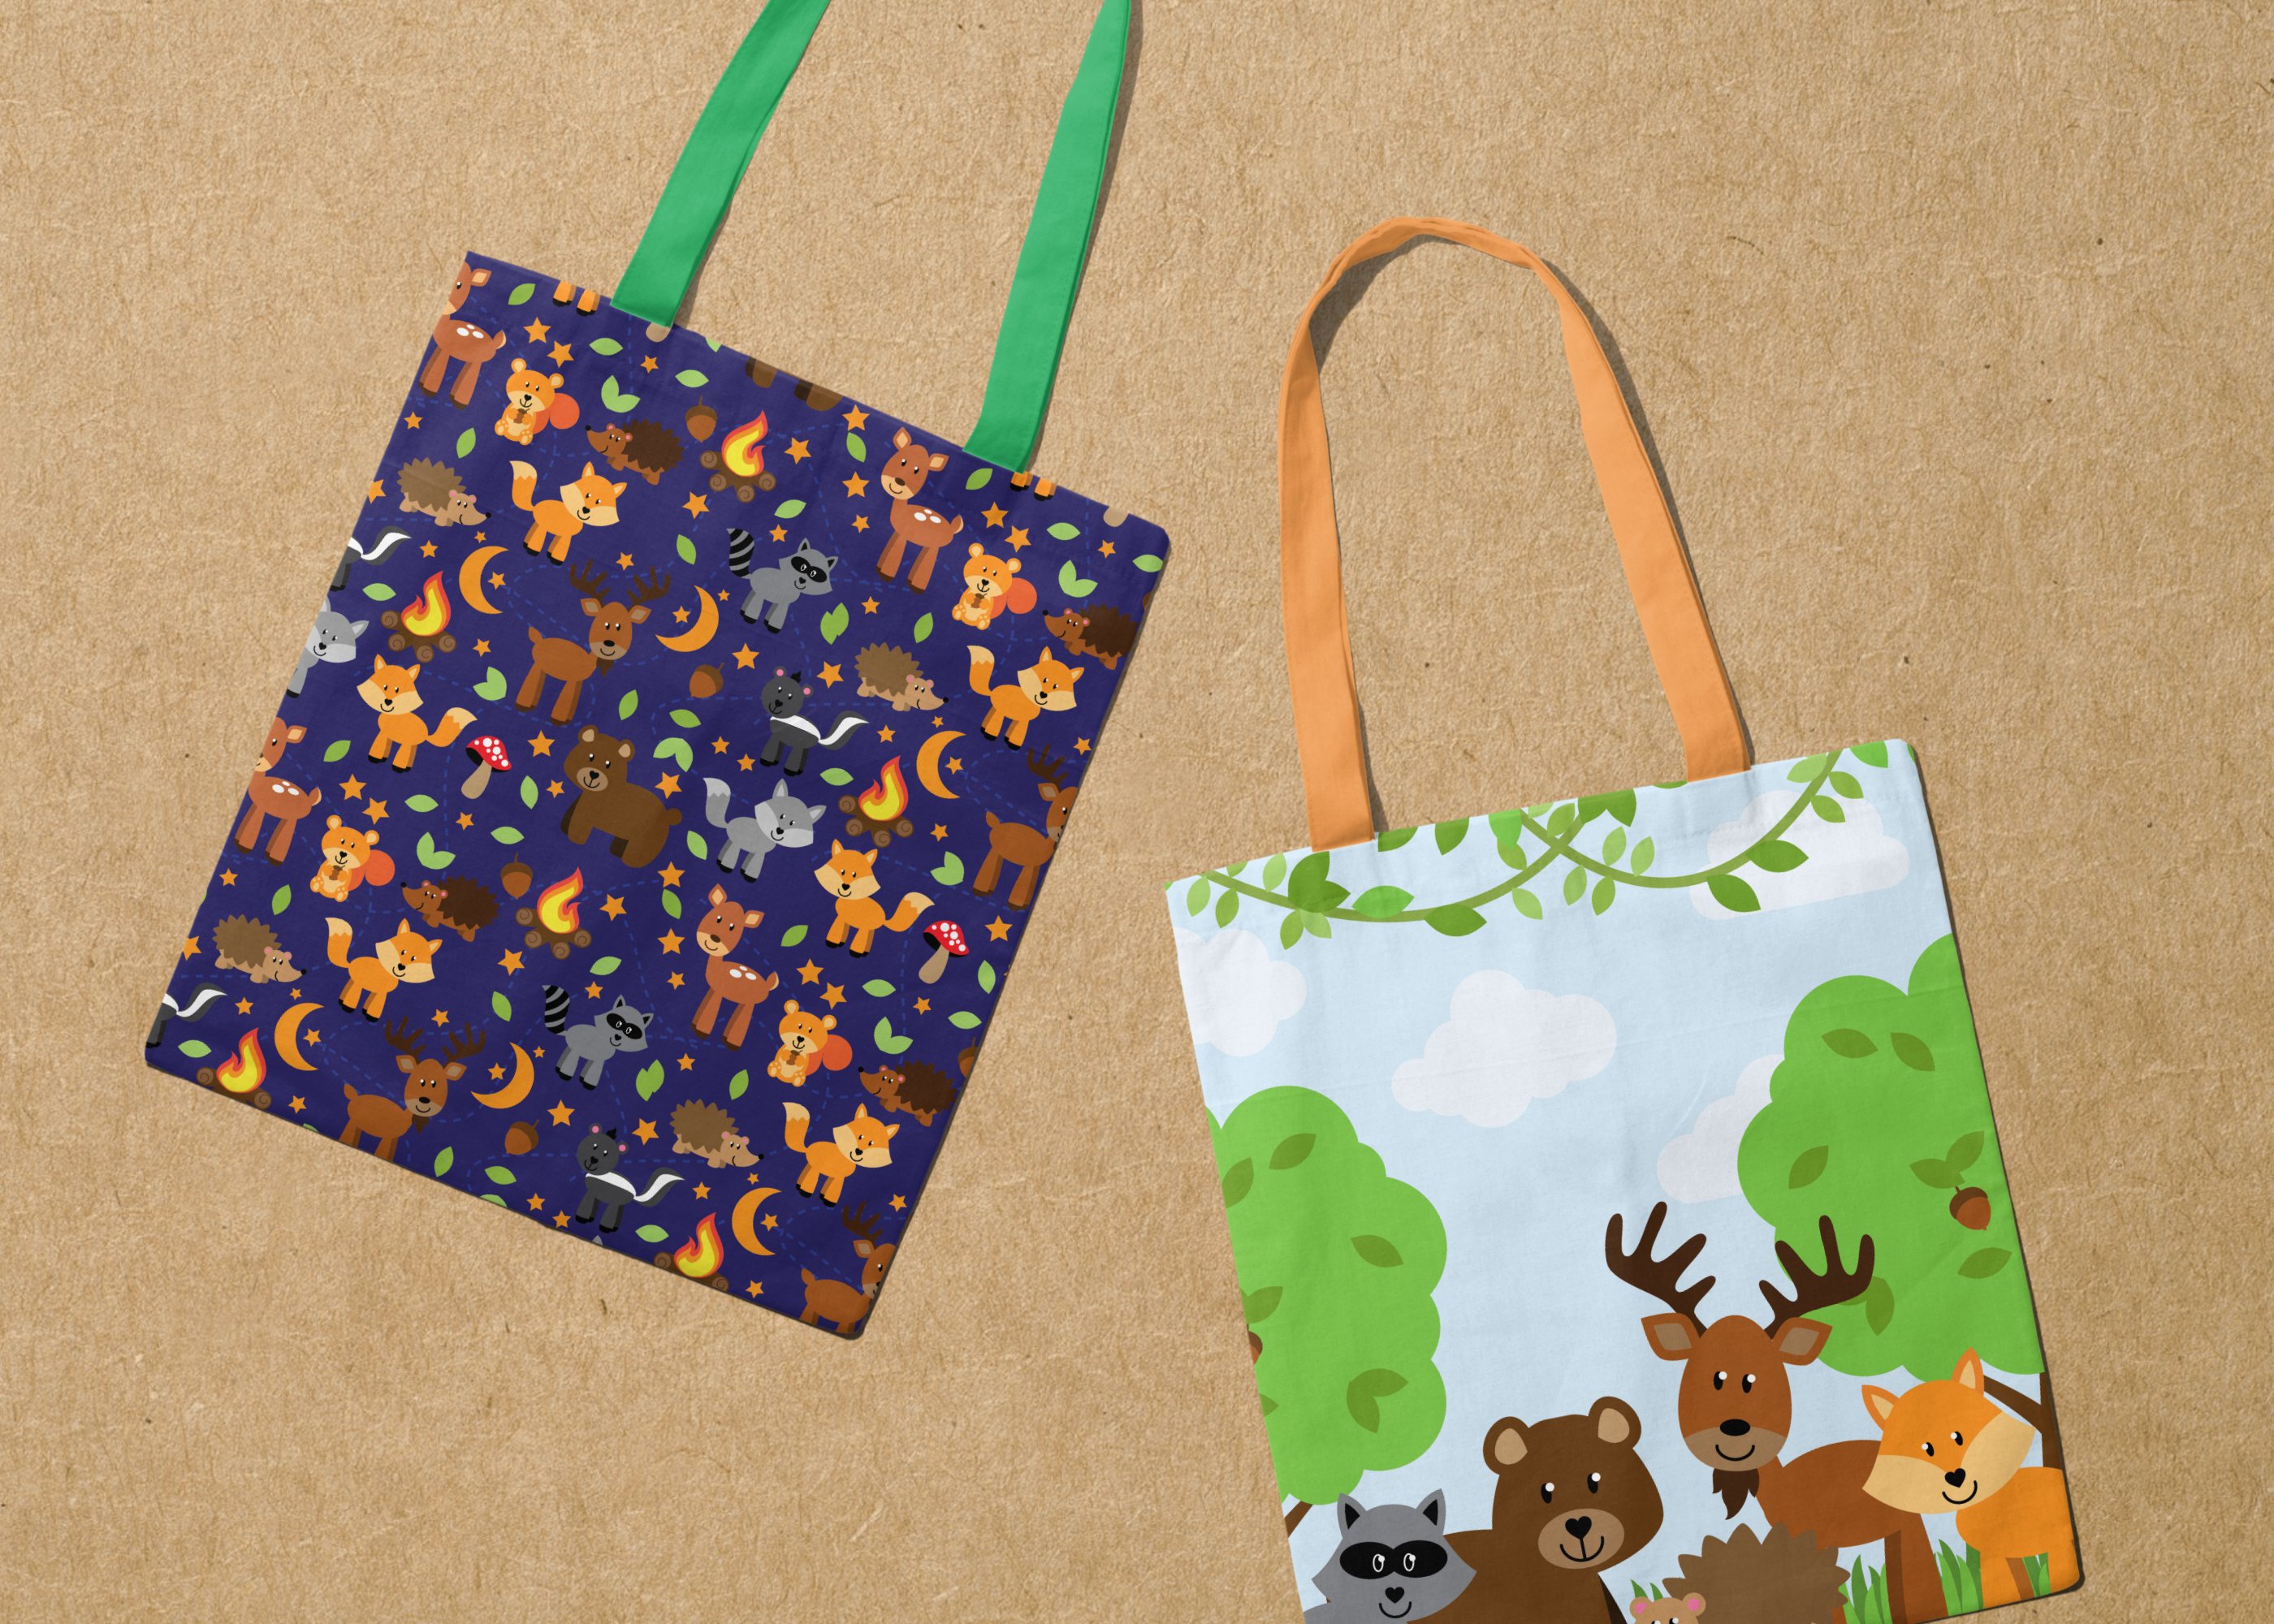 Nice illustrations for eco bag.